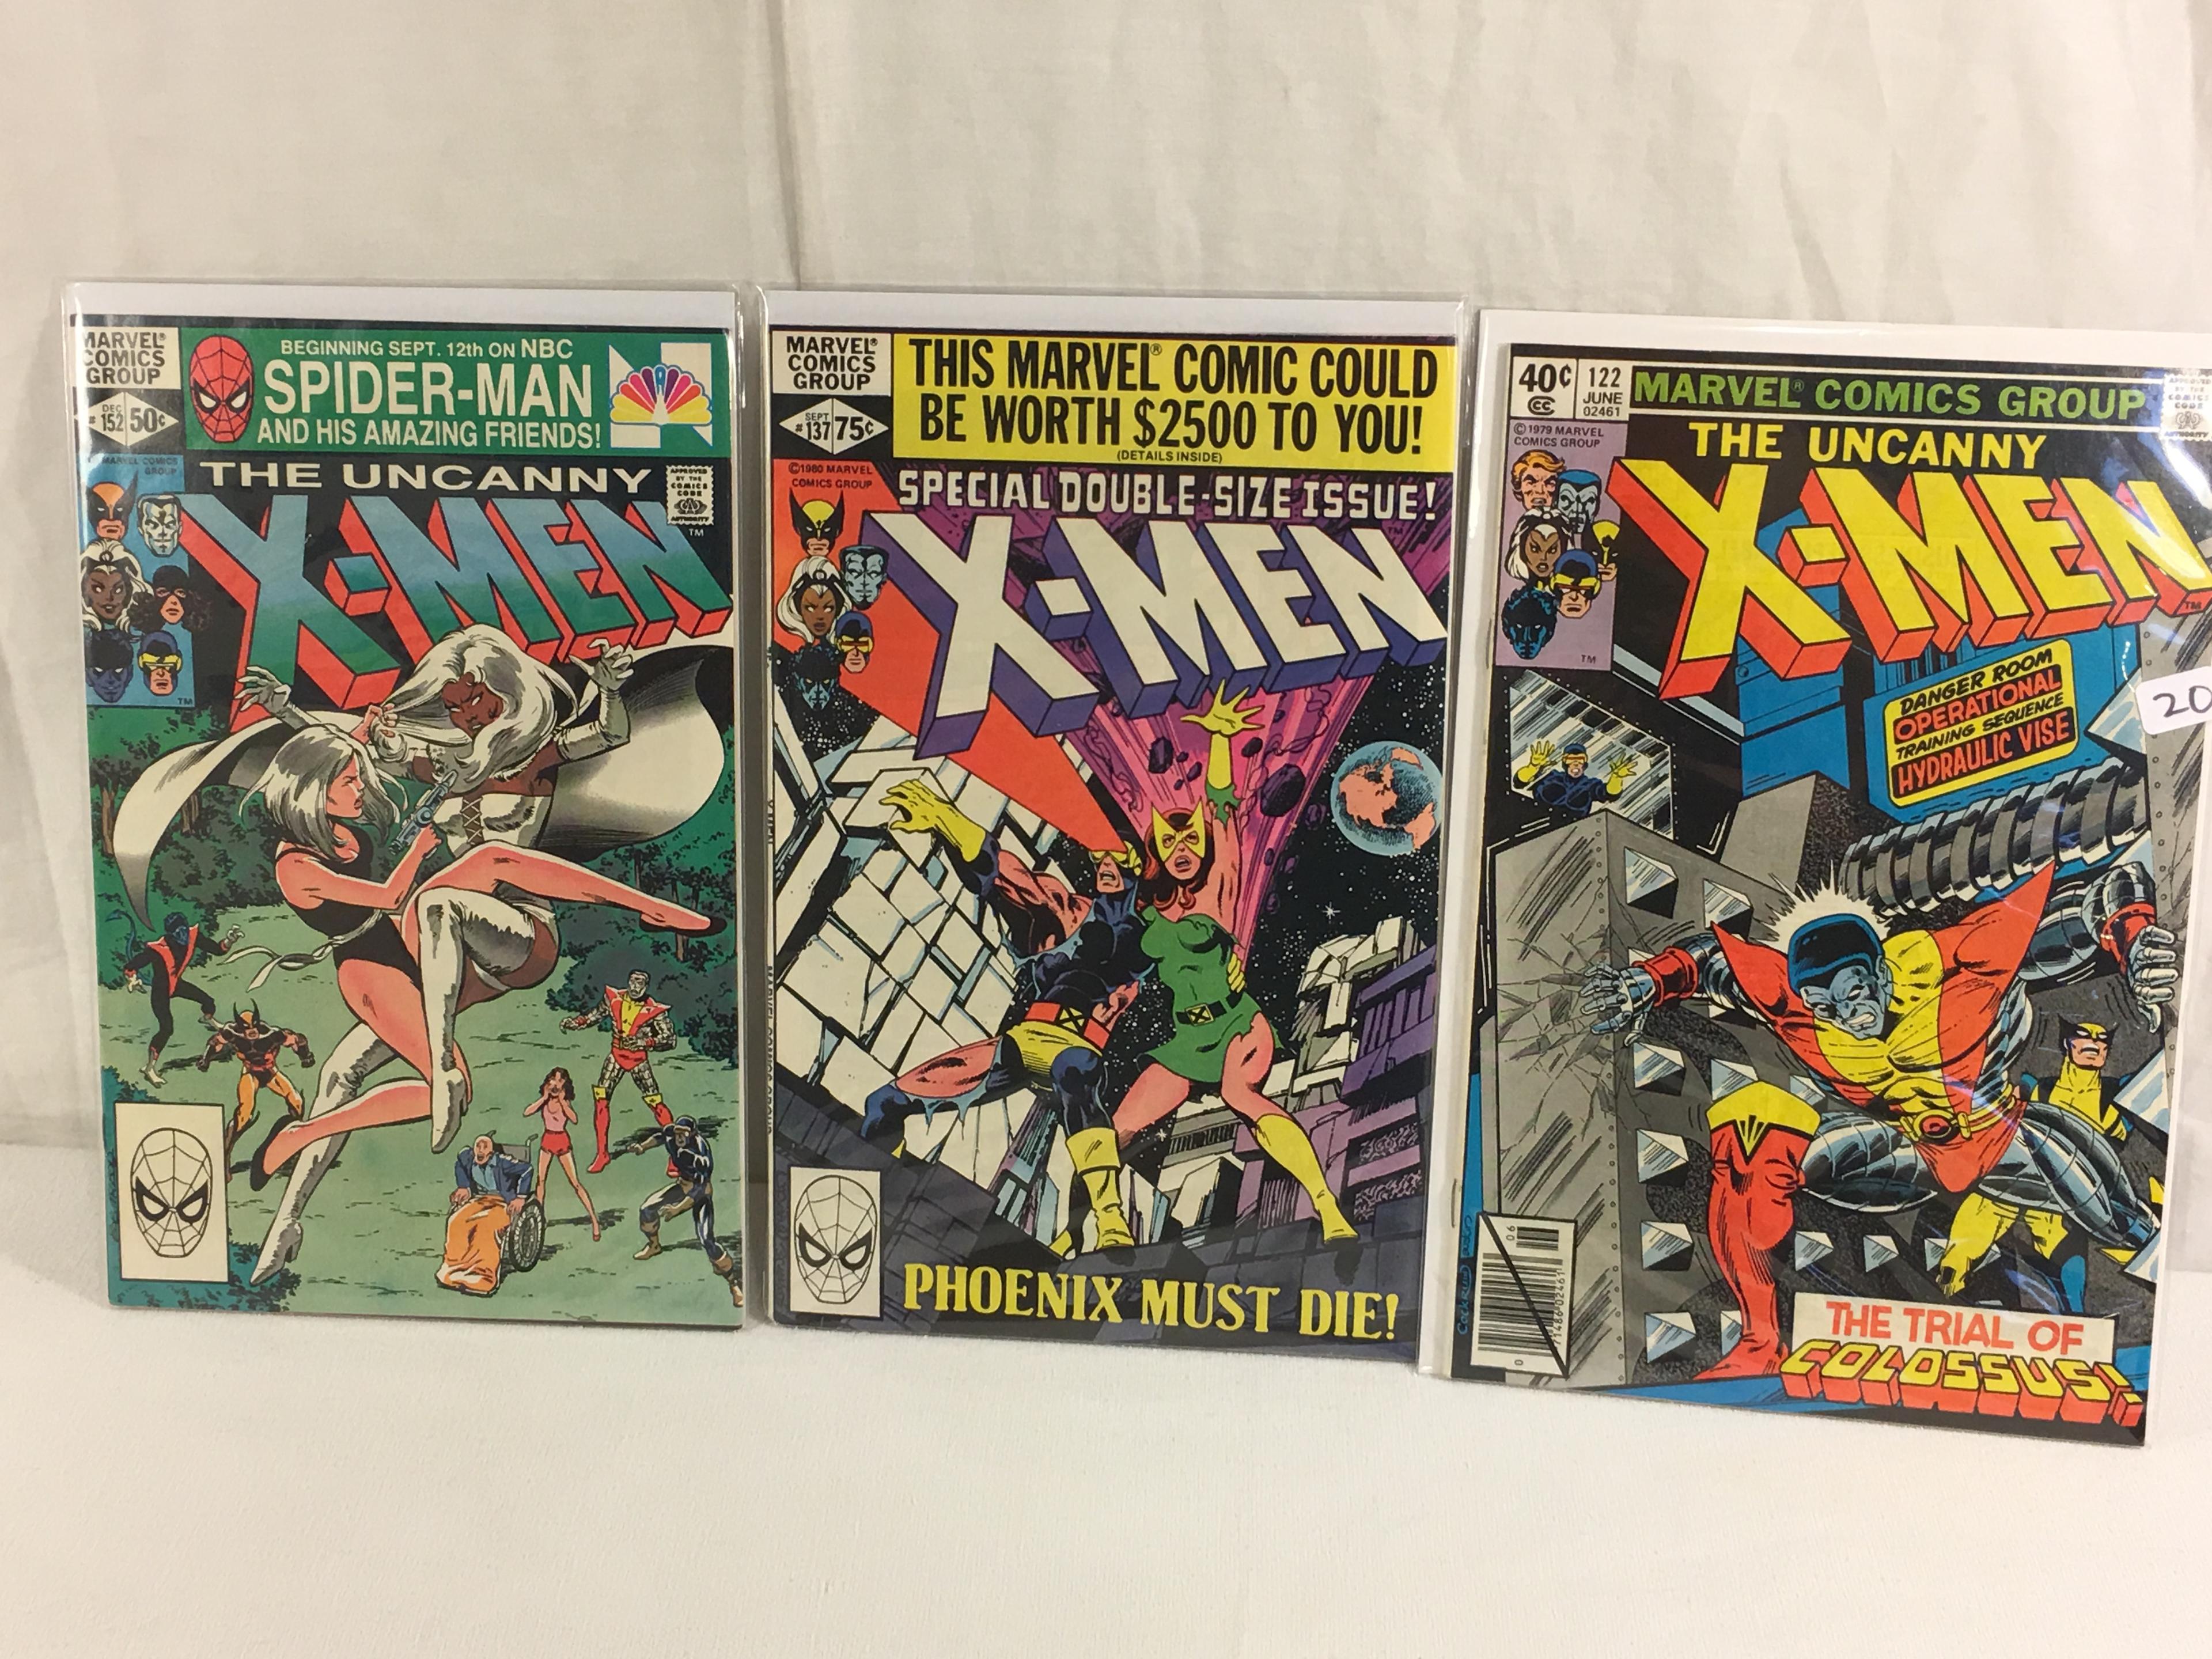 Lot of 3 Pcs Collector Vintage Marvel Comics The Uncanny X-Men Comic Books No.122.137.152.